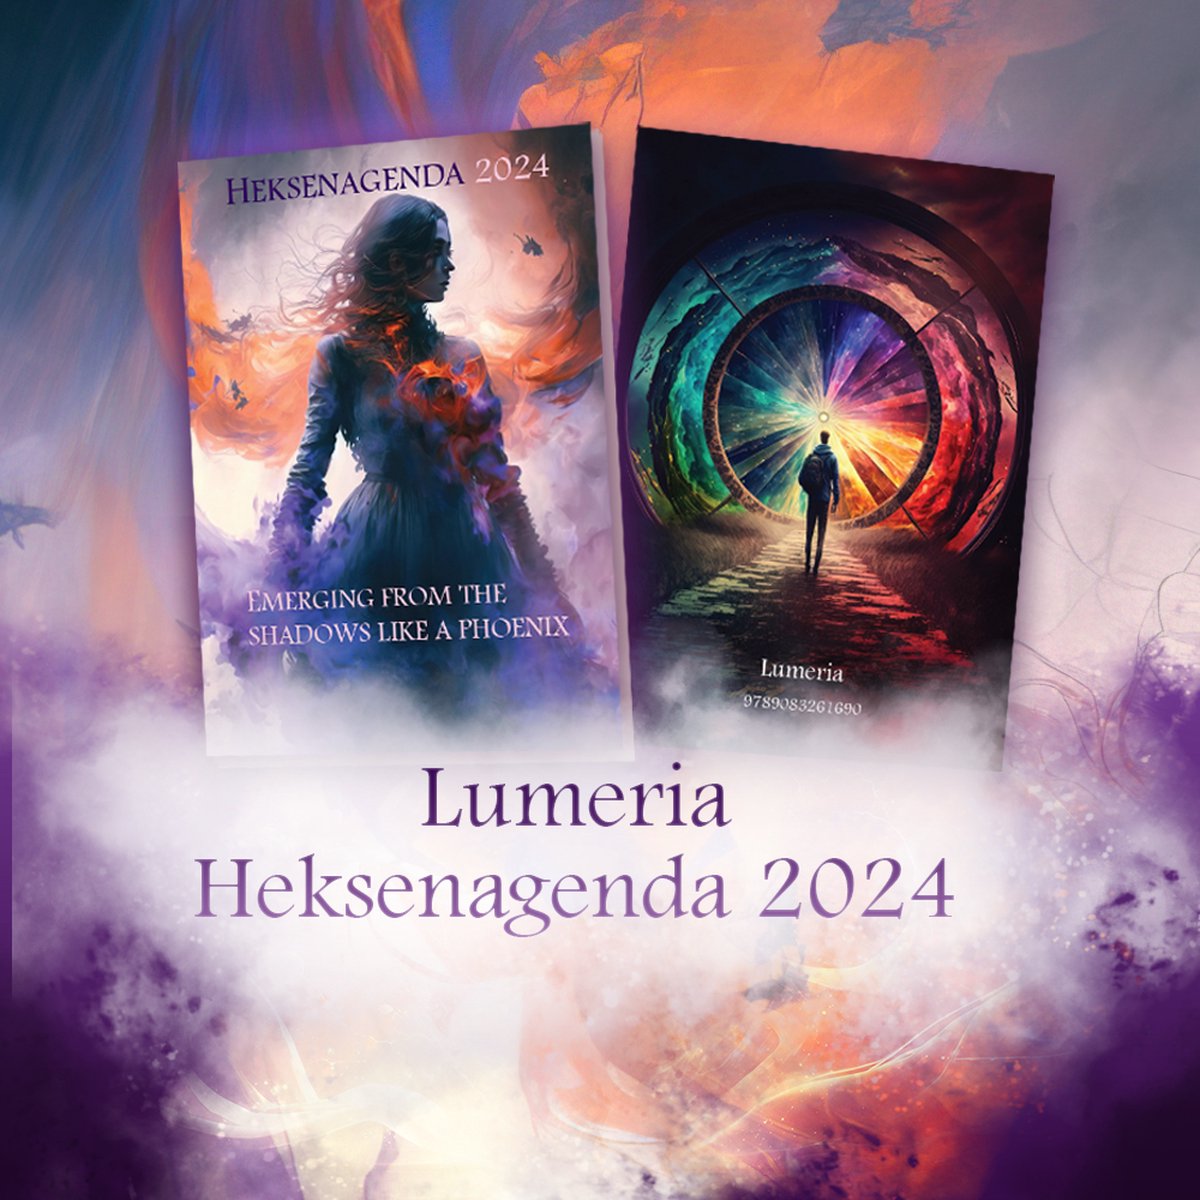 Heksenagenda 2024 - Emerging from the shadows like a phoenix